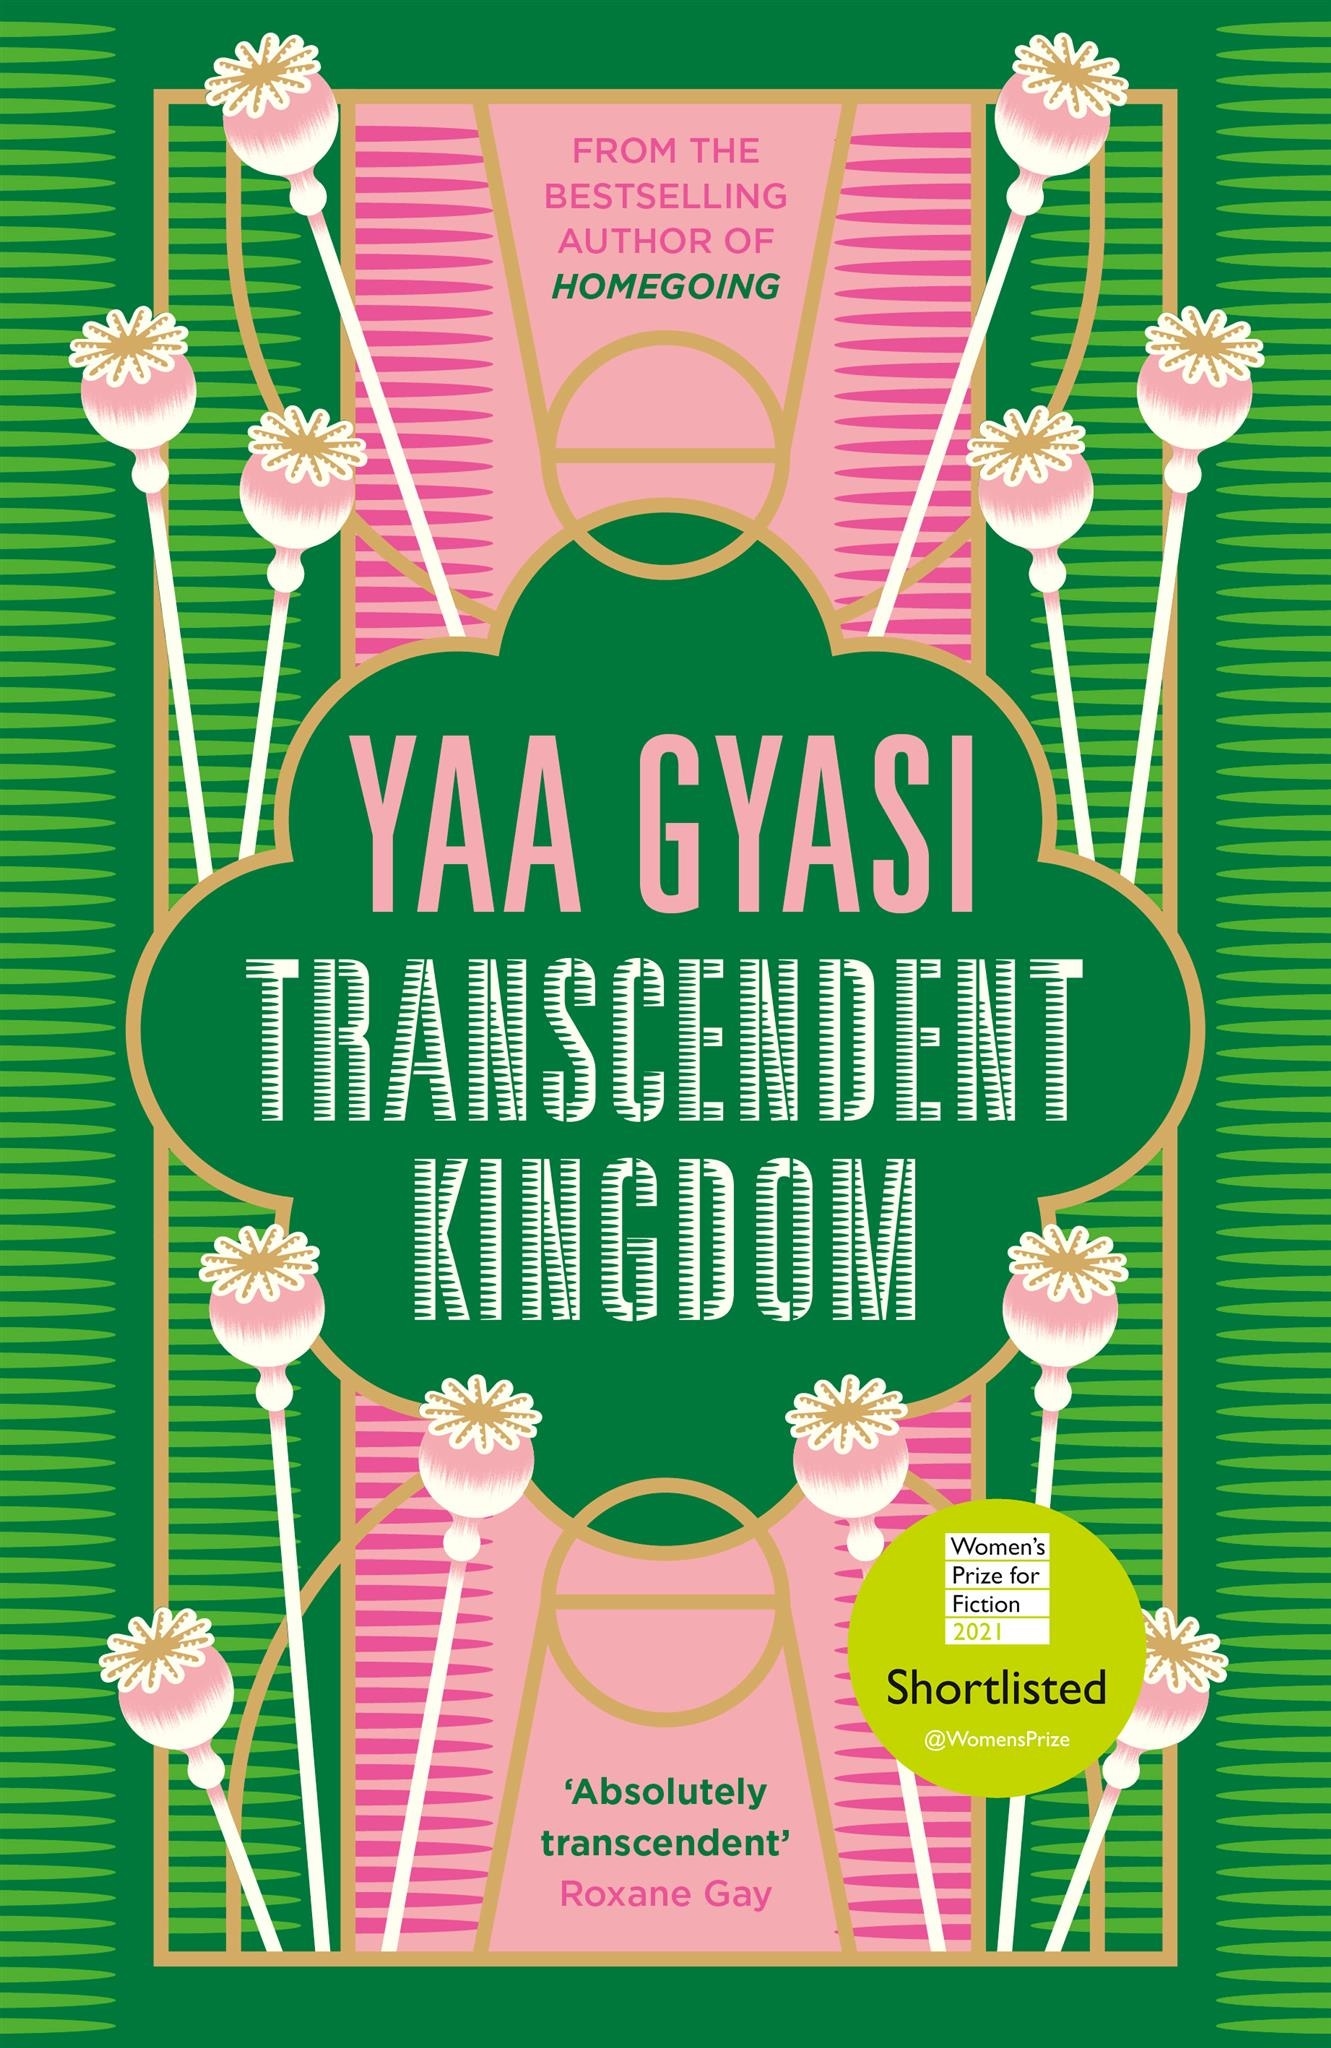 Book “Transcendent Kingdom” by Yaa Gyasi — March 4, 2021